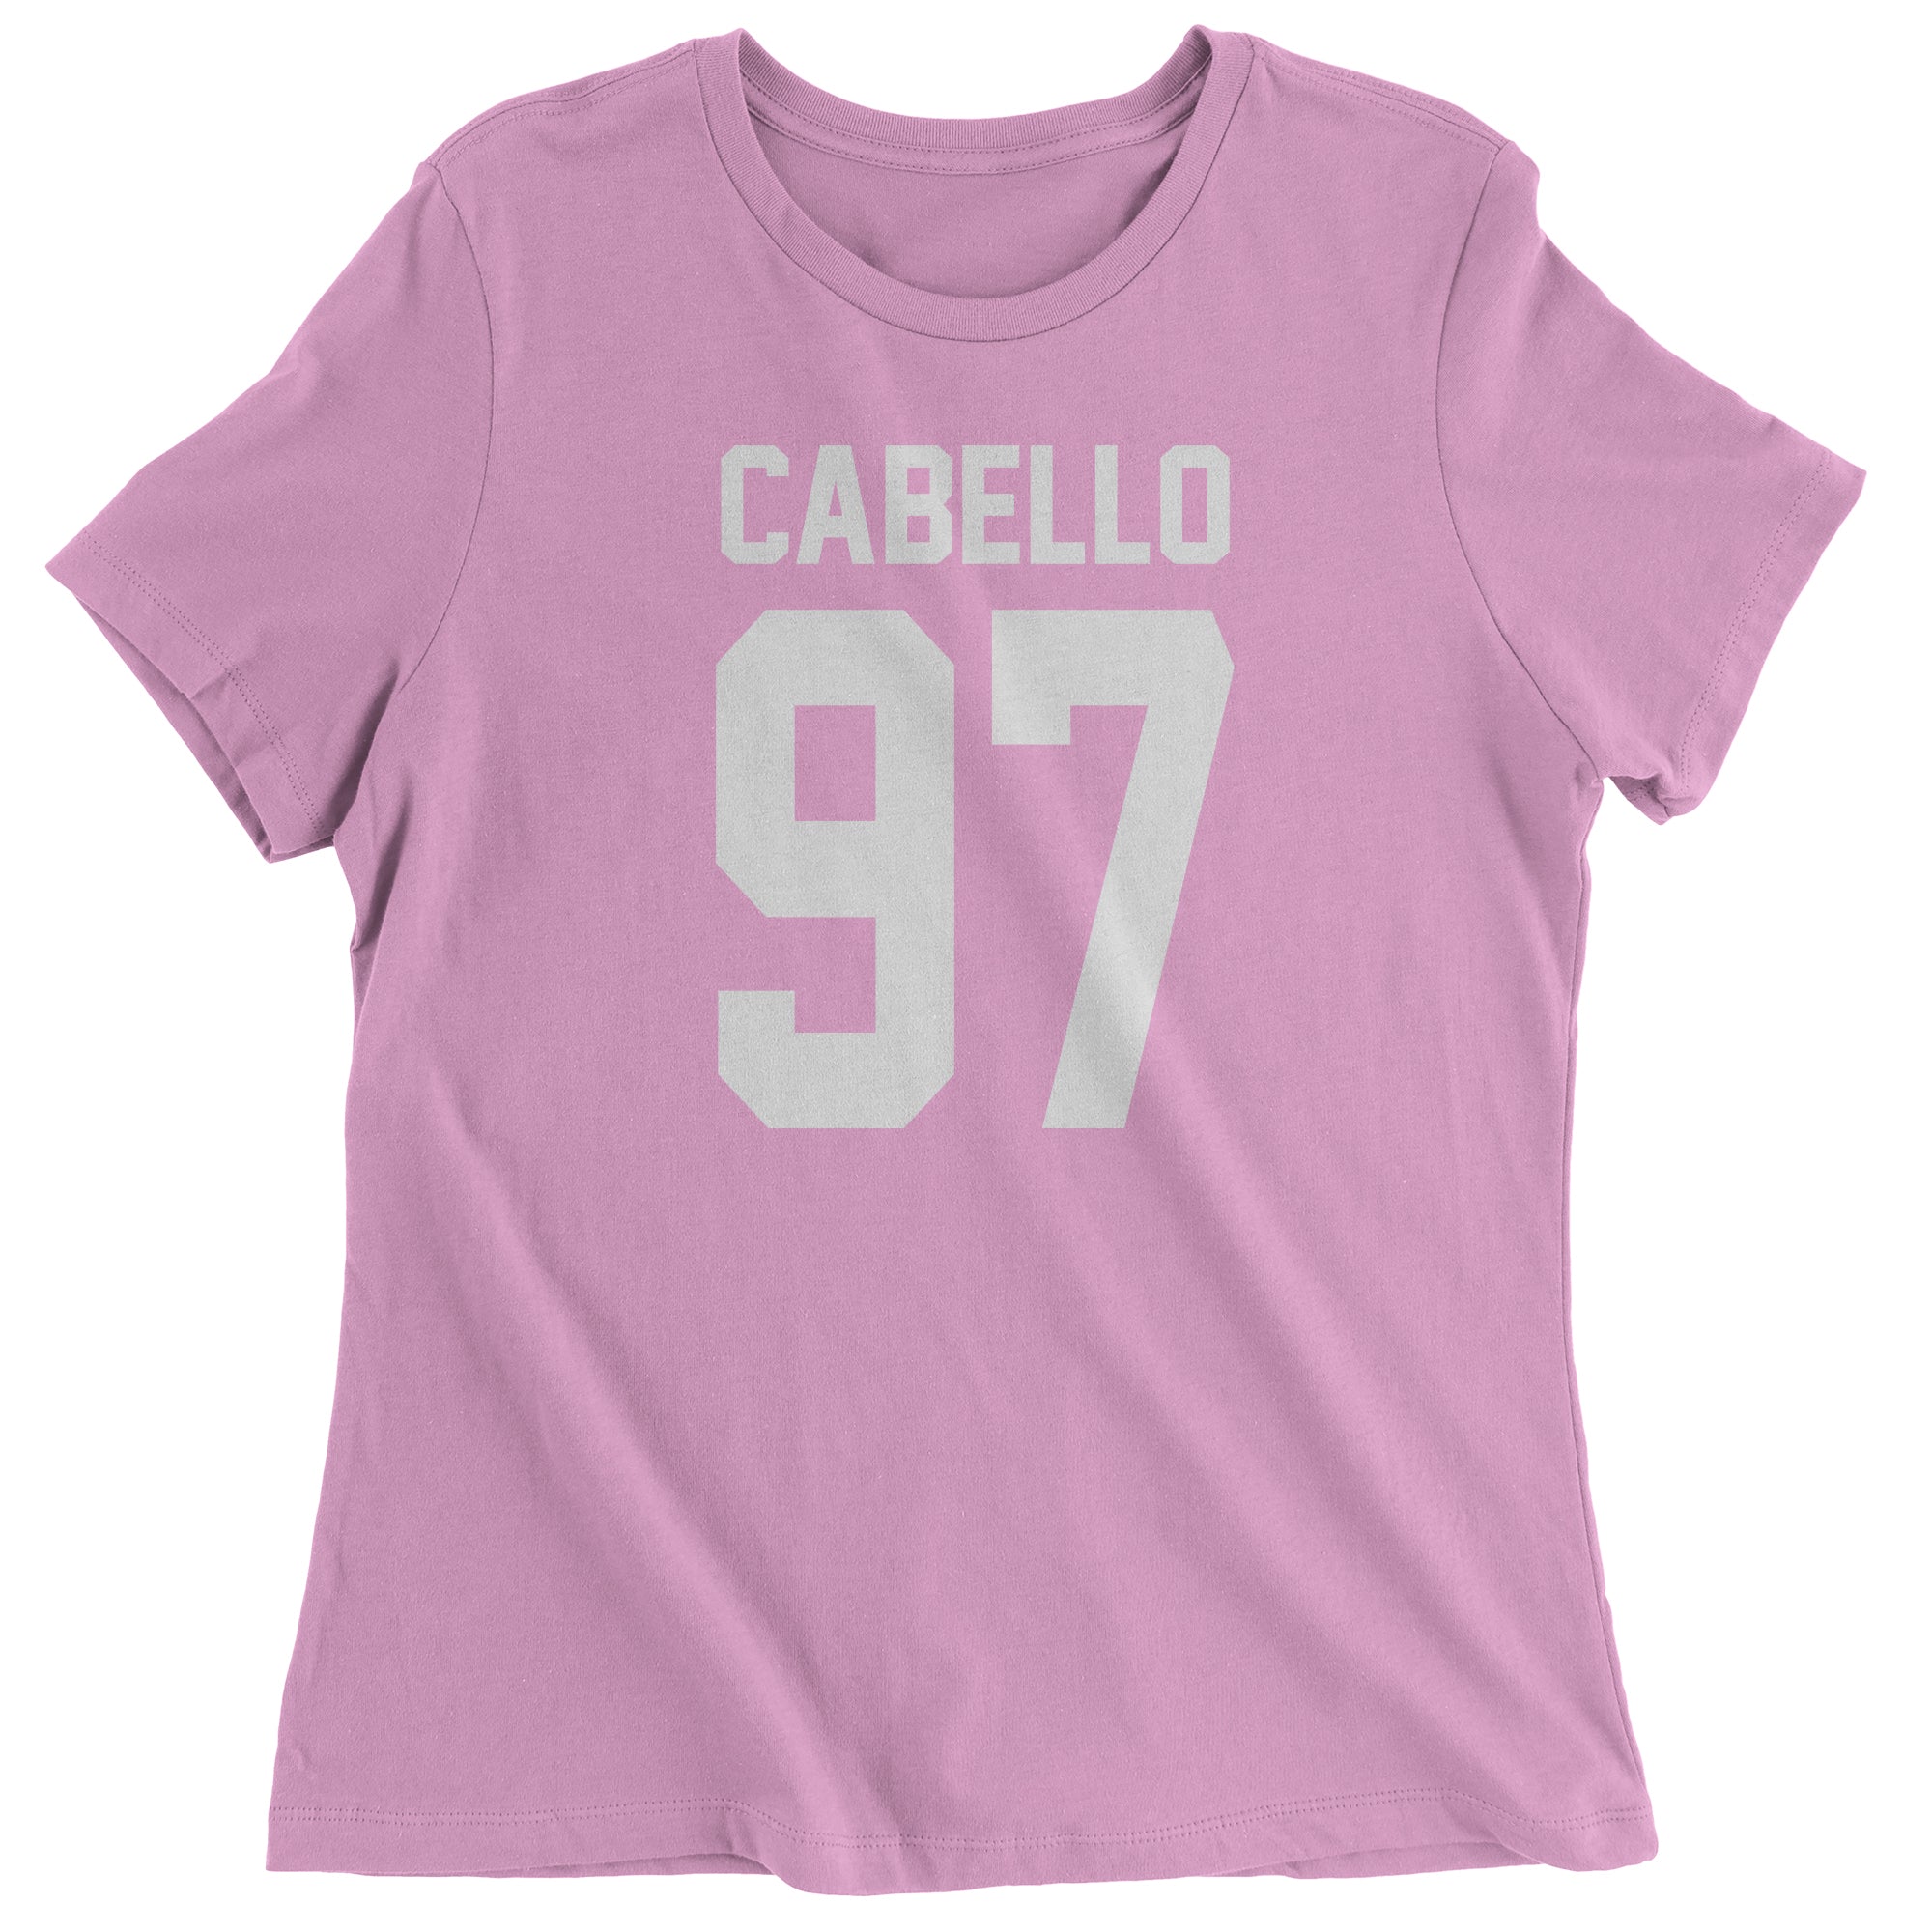 Cabello 97 Jersey Style Birthday Year Women's T-Shirt